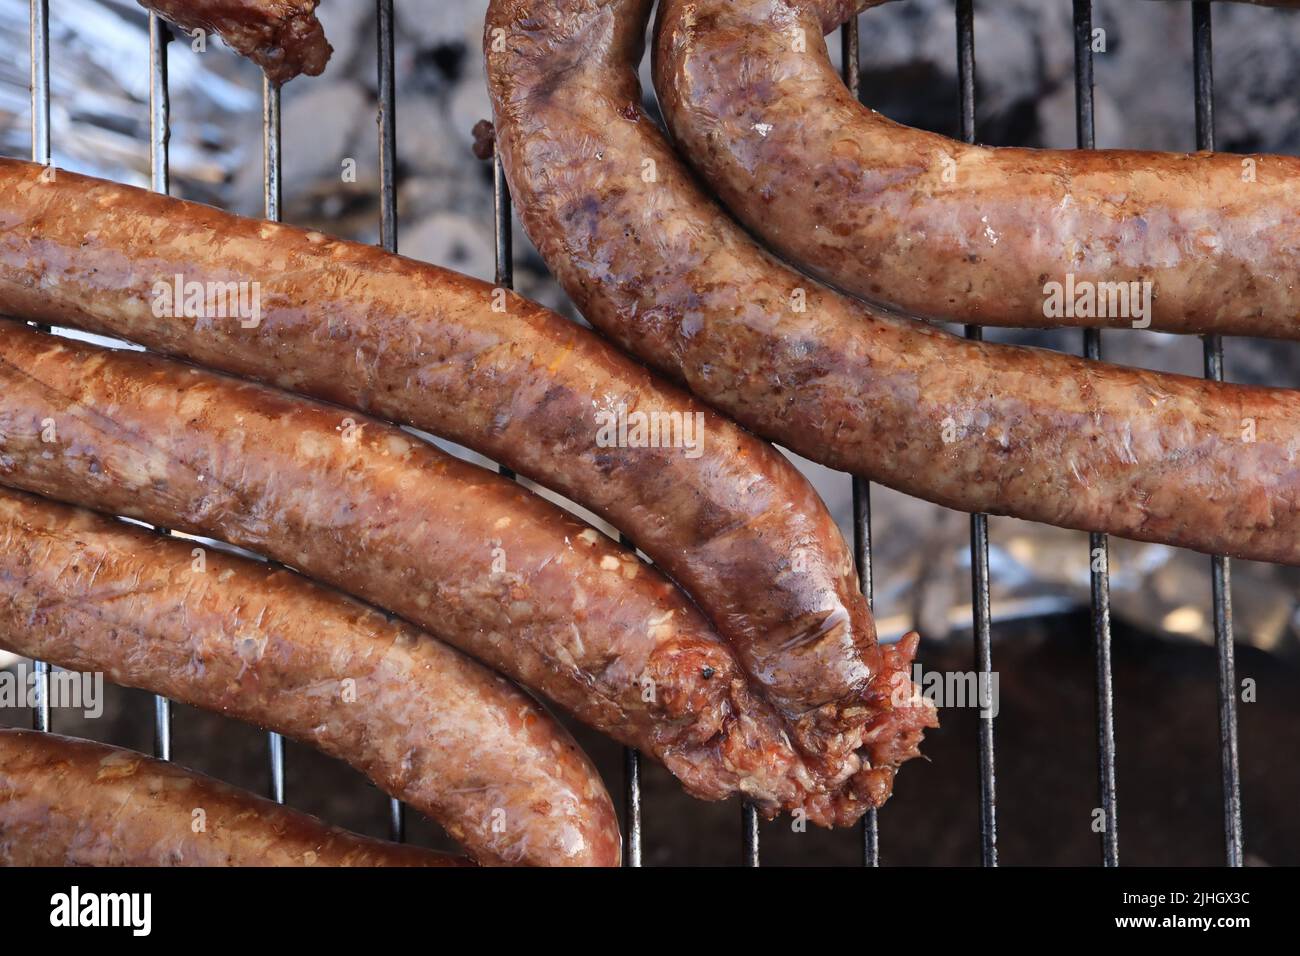 https://c8.alamy.com/comp/2JHGX3C/south-african-braai-meat-including-boerewors-sausage-2JHGX3C.jpg